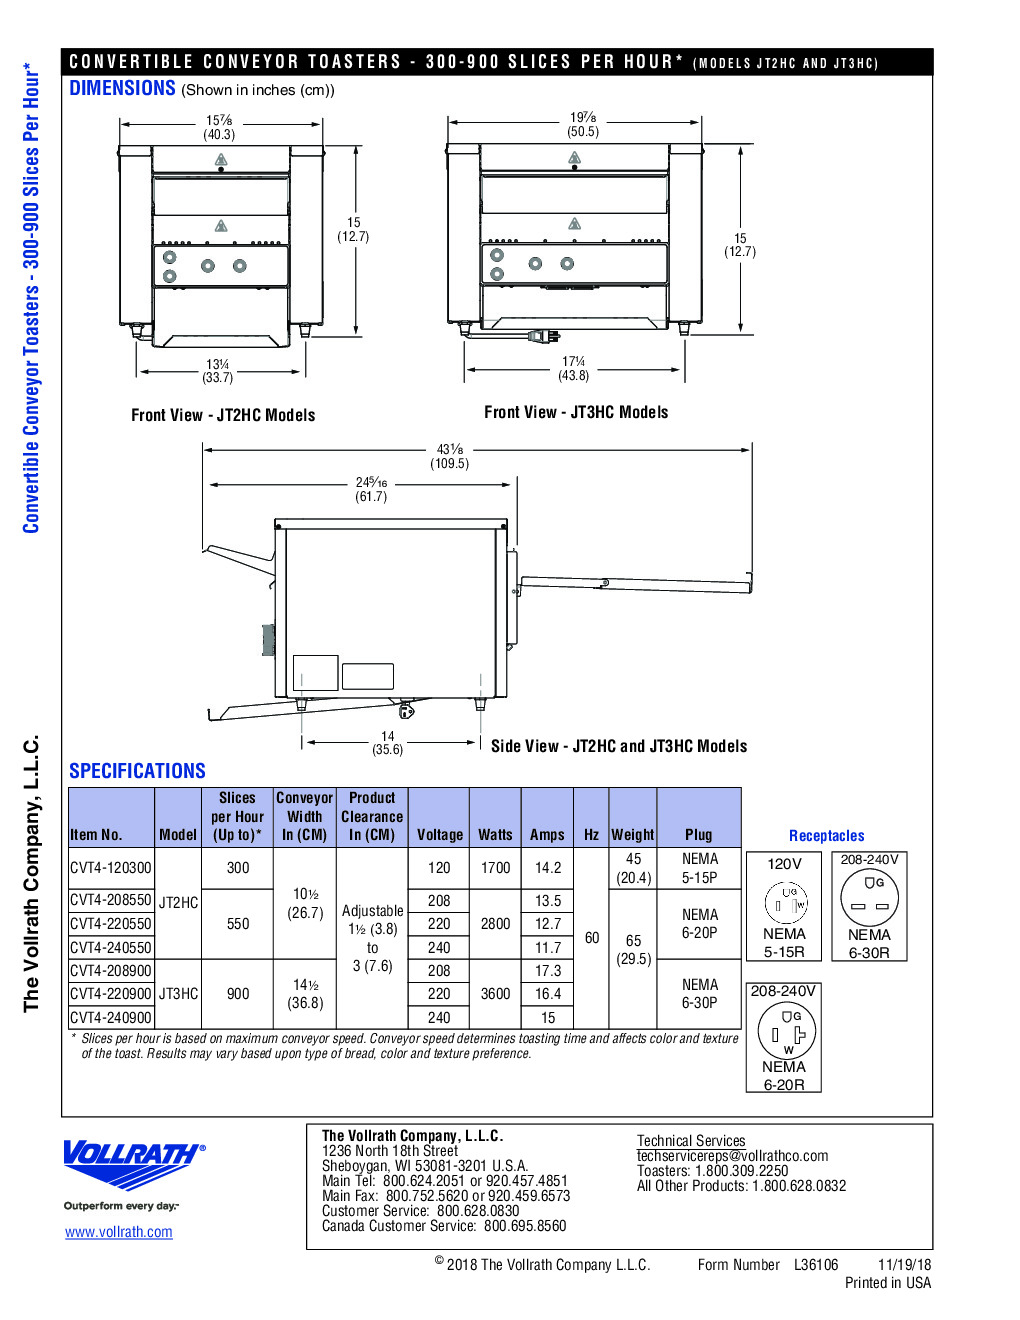 Vollrath CVT4-220900 Conveyor Type Toaster